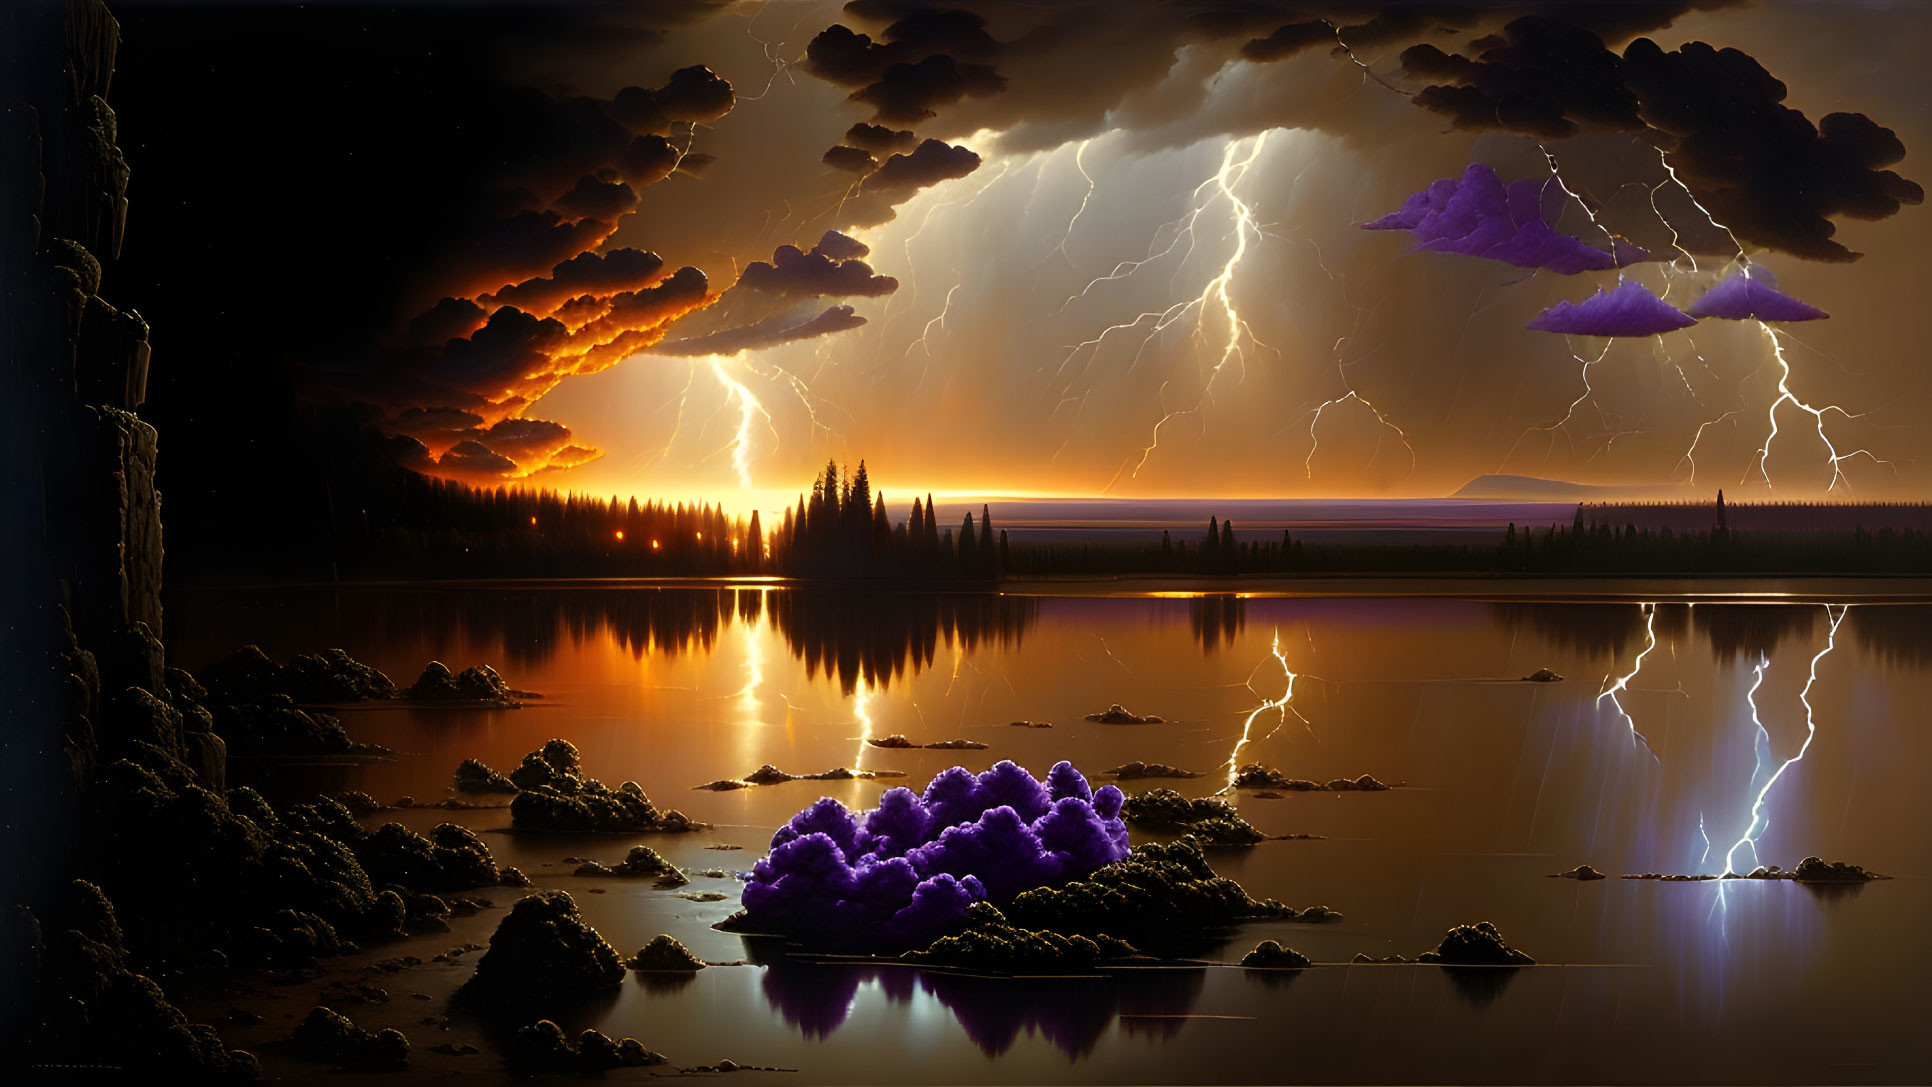 Thunderstorm illuminates night lake scene with lightning strikes